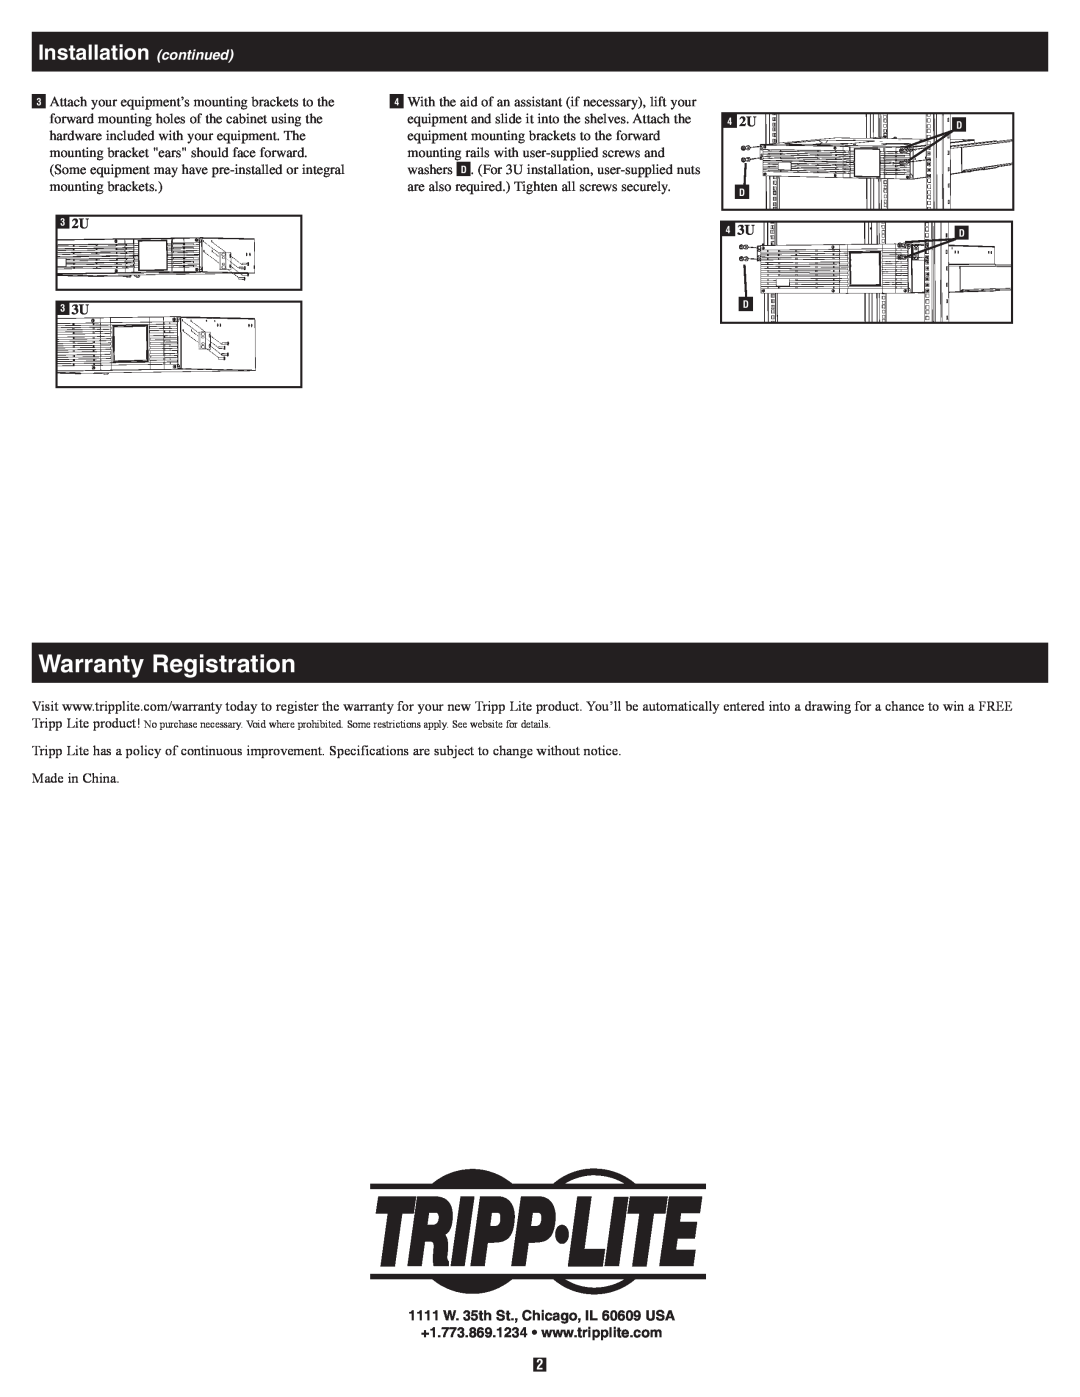 Tripp Lite 4POSTRAILKIT owner manual Installation continued, Warranty Registration 